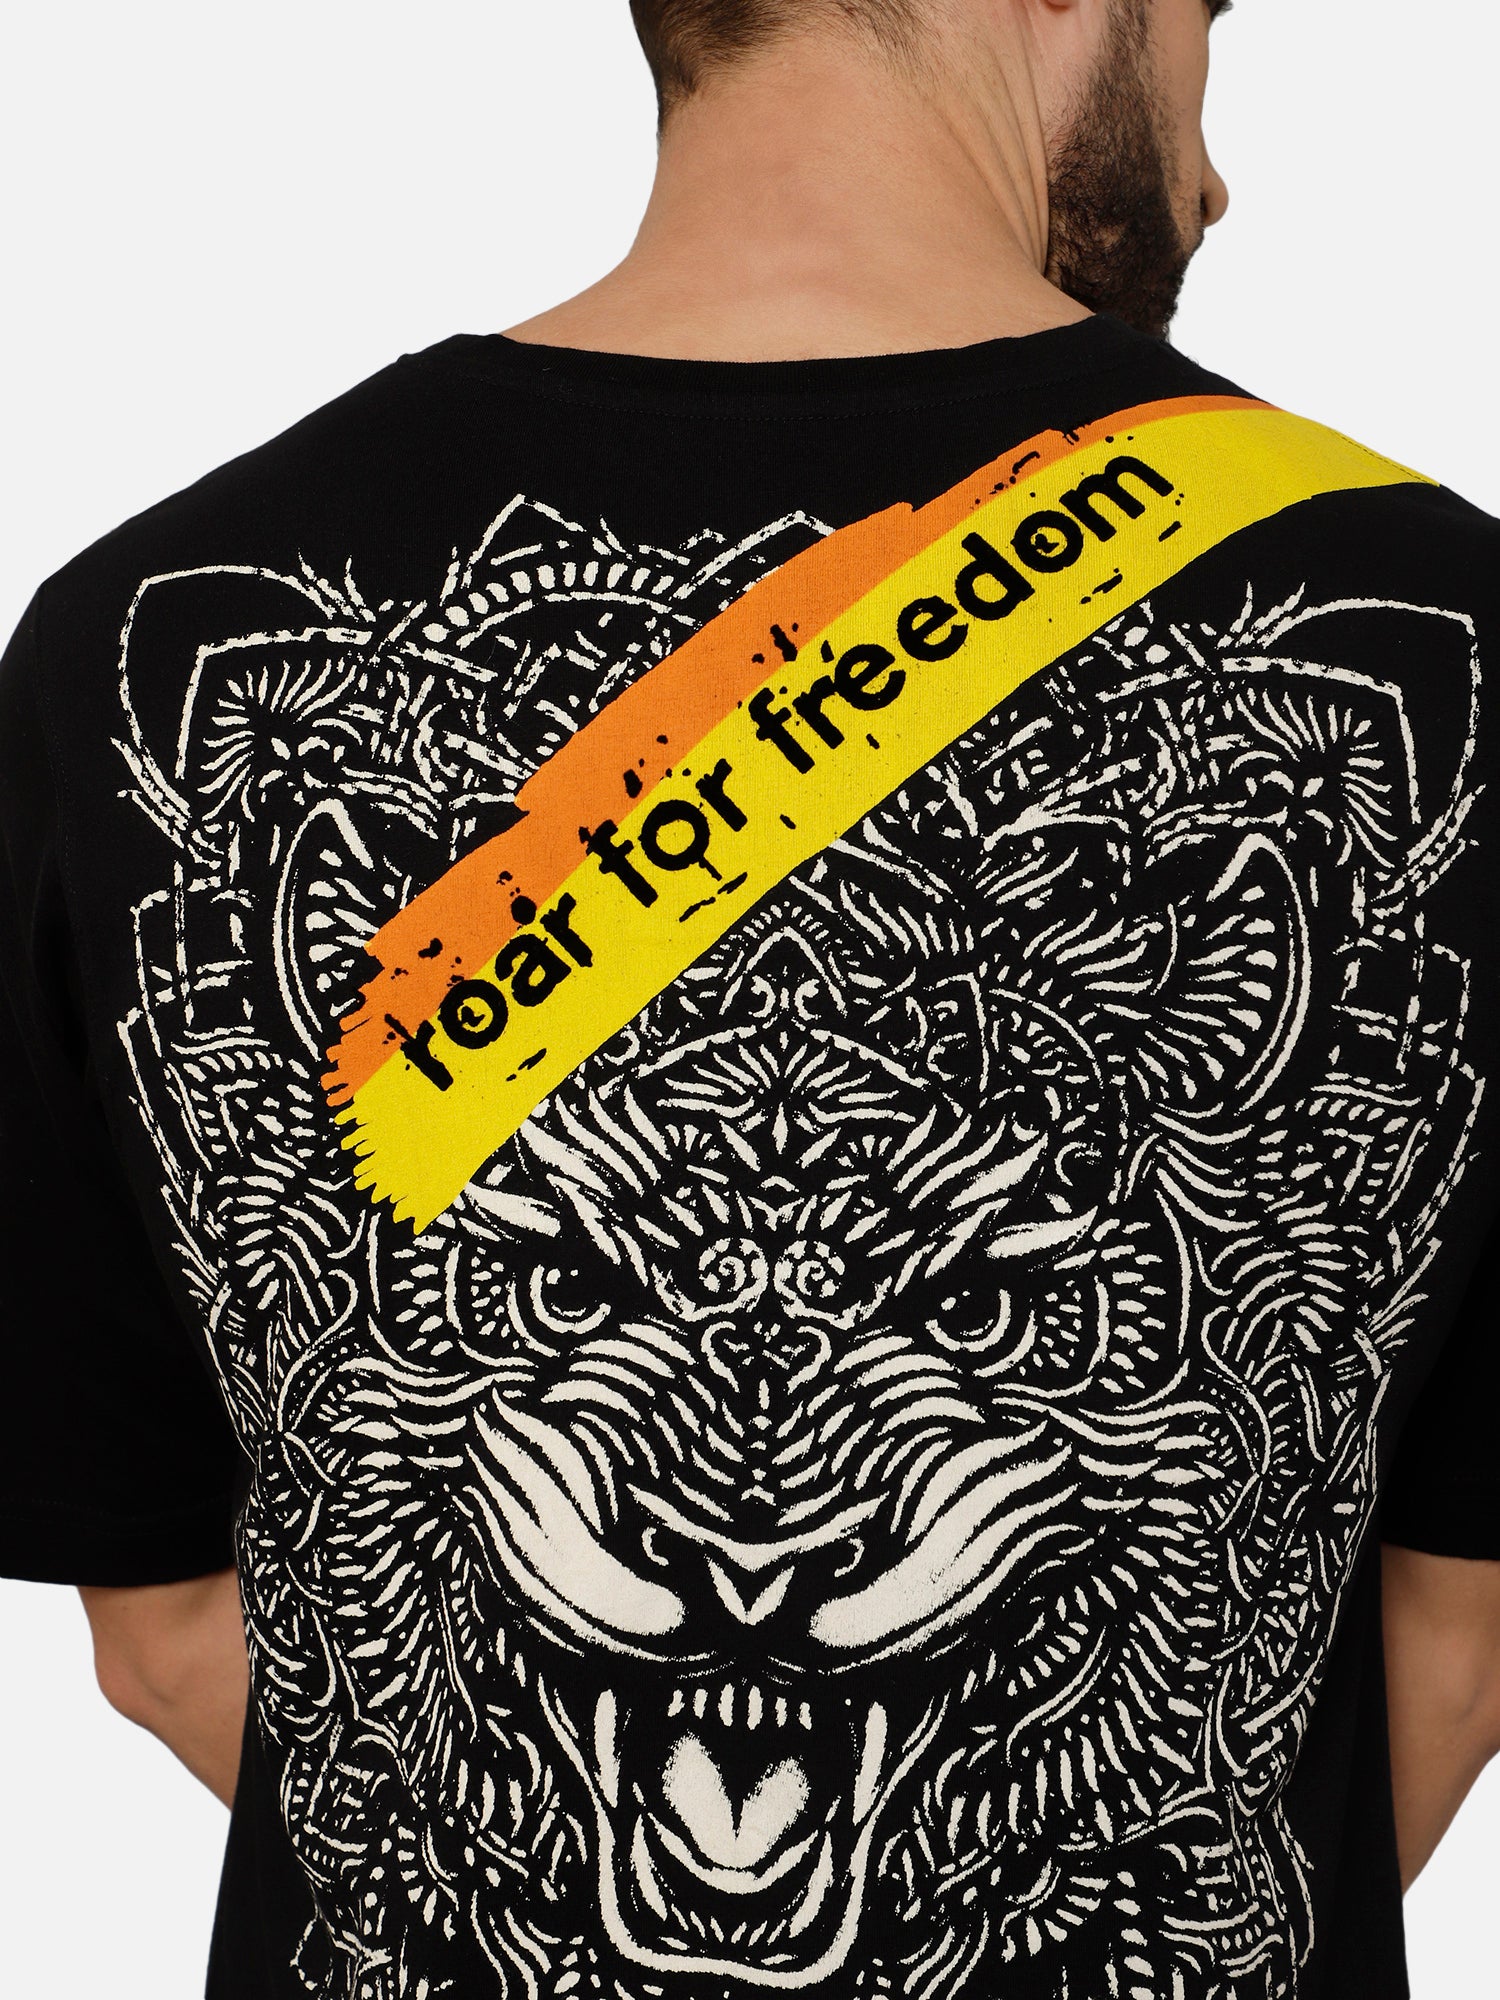 Punk Roar For Freedom Oversized Tshirt